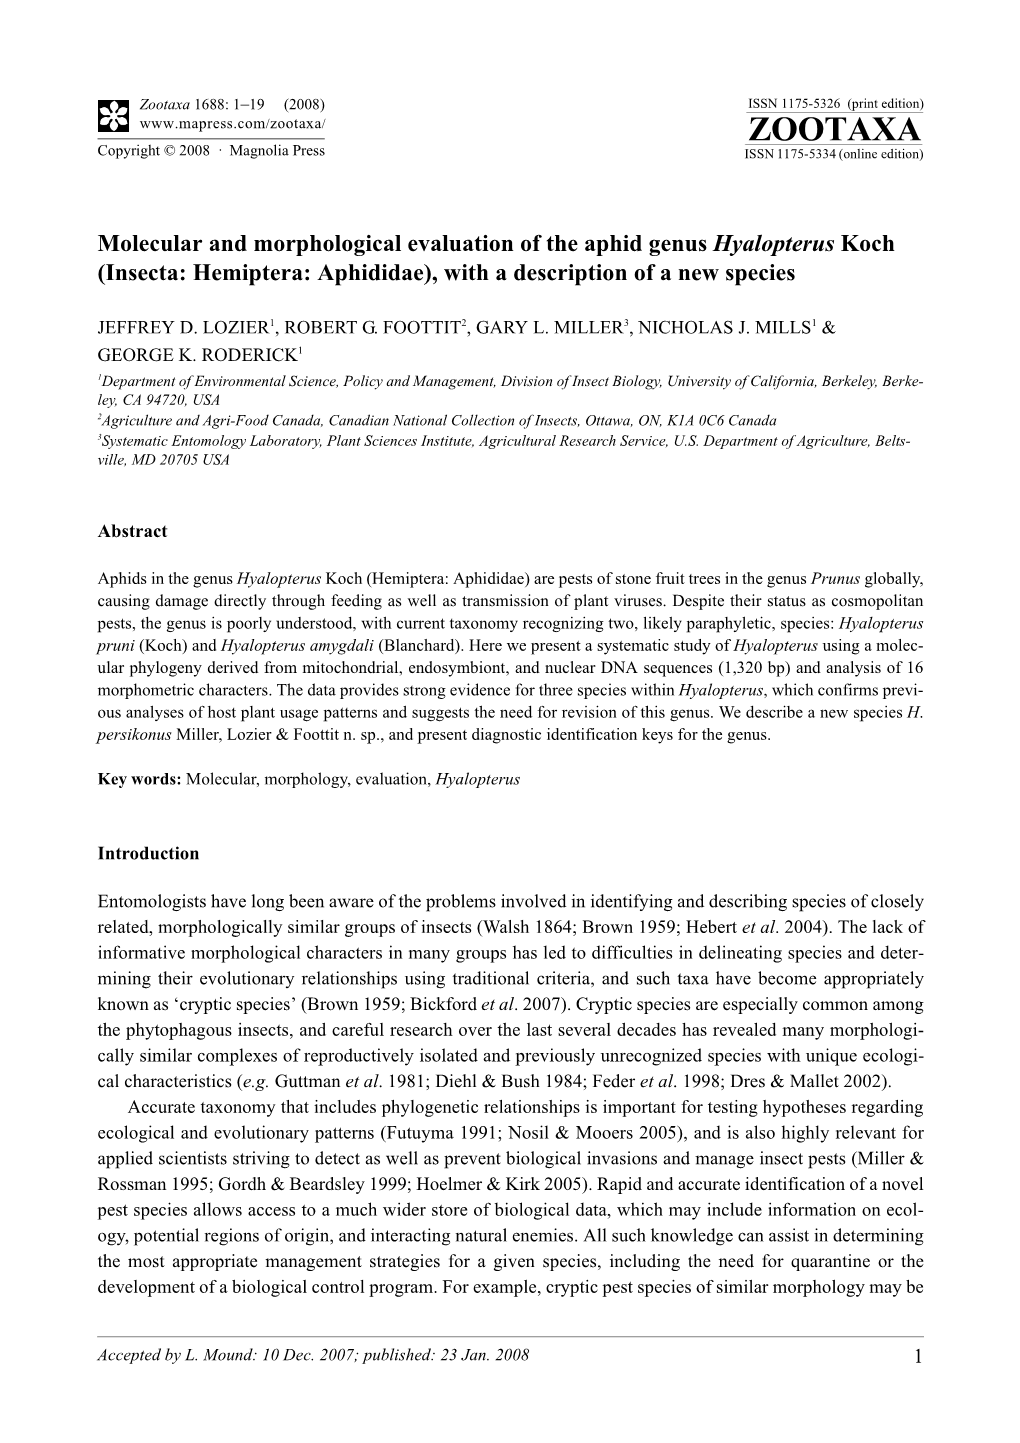 Zootaxa, Molecular and Morphological Evaluation of The